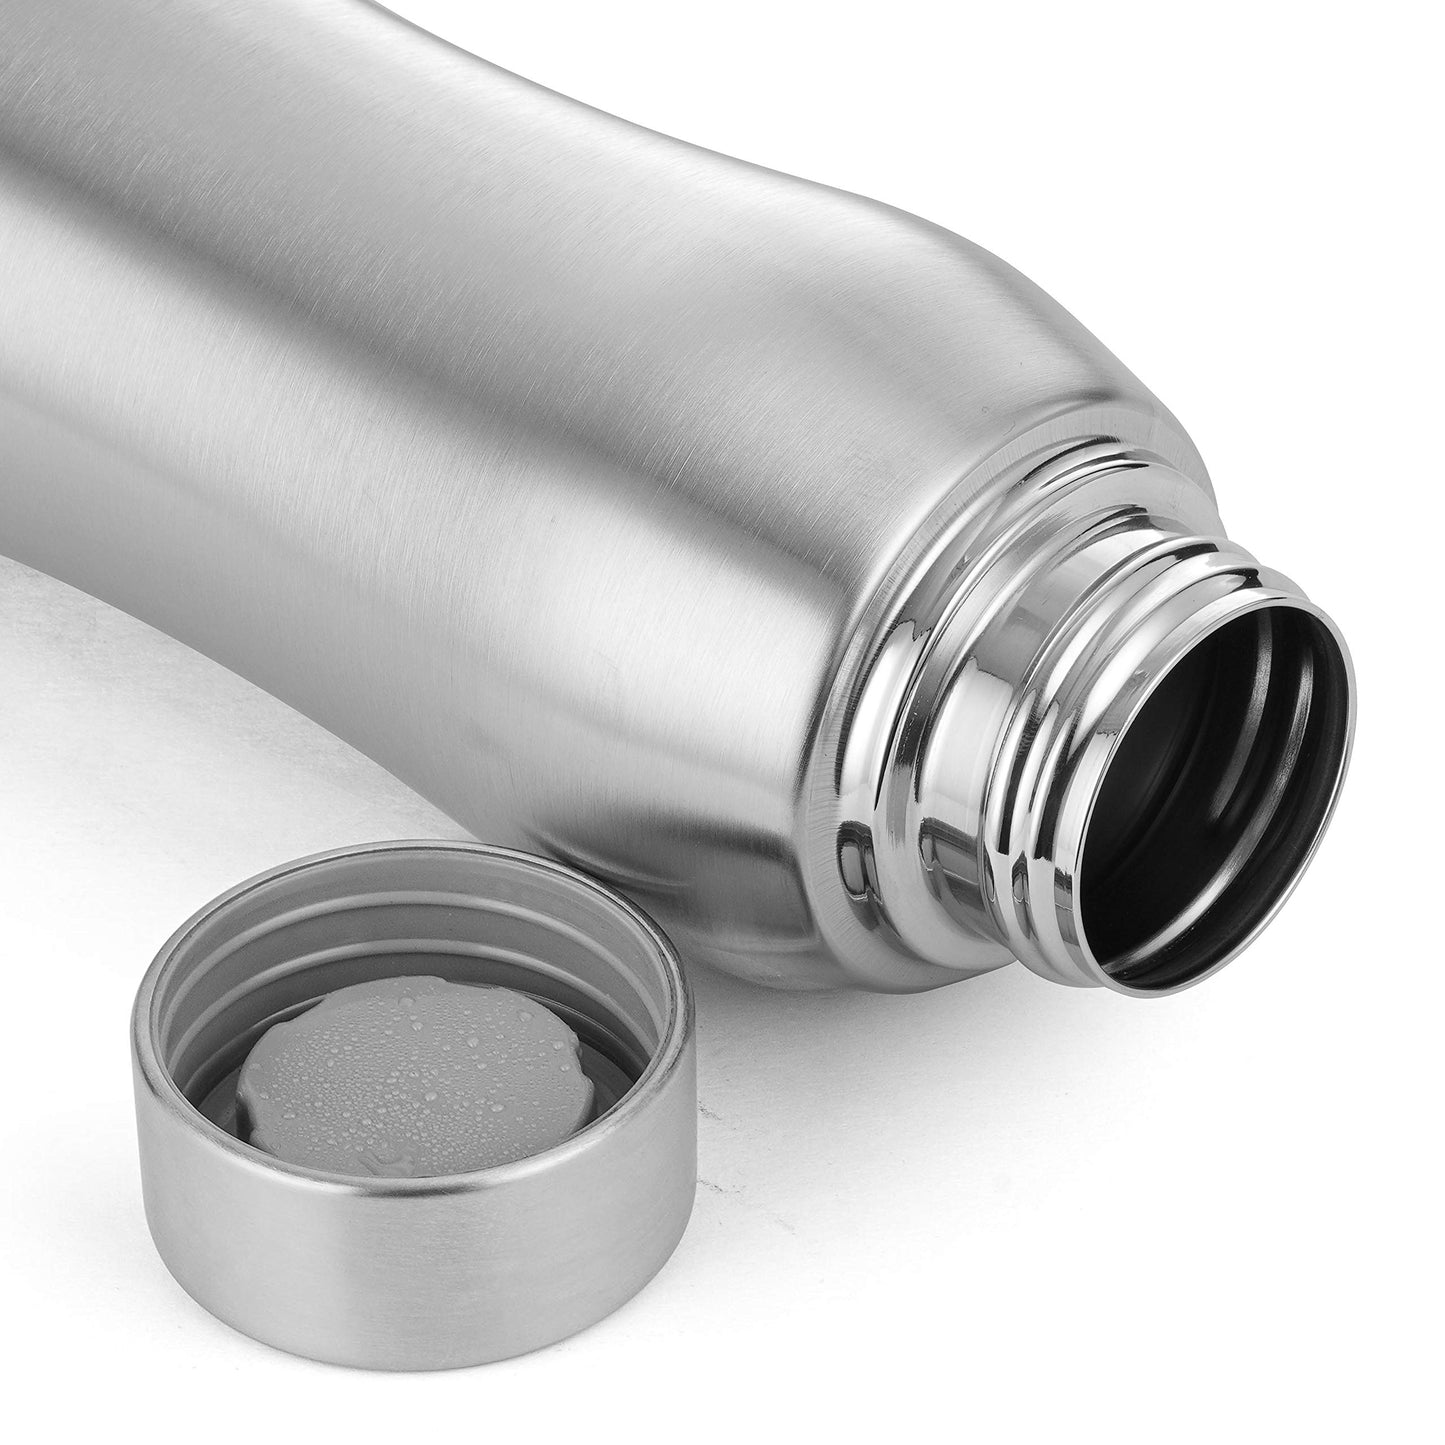 Stainless Steel Designer Water Bottle (1 L Each)- Set of 2